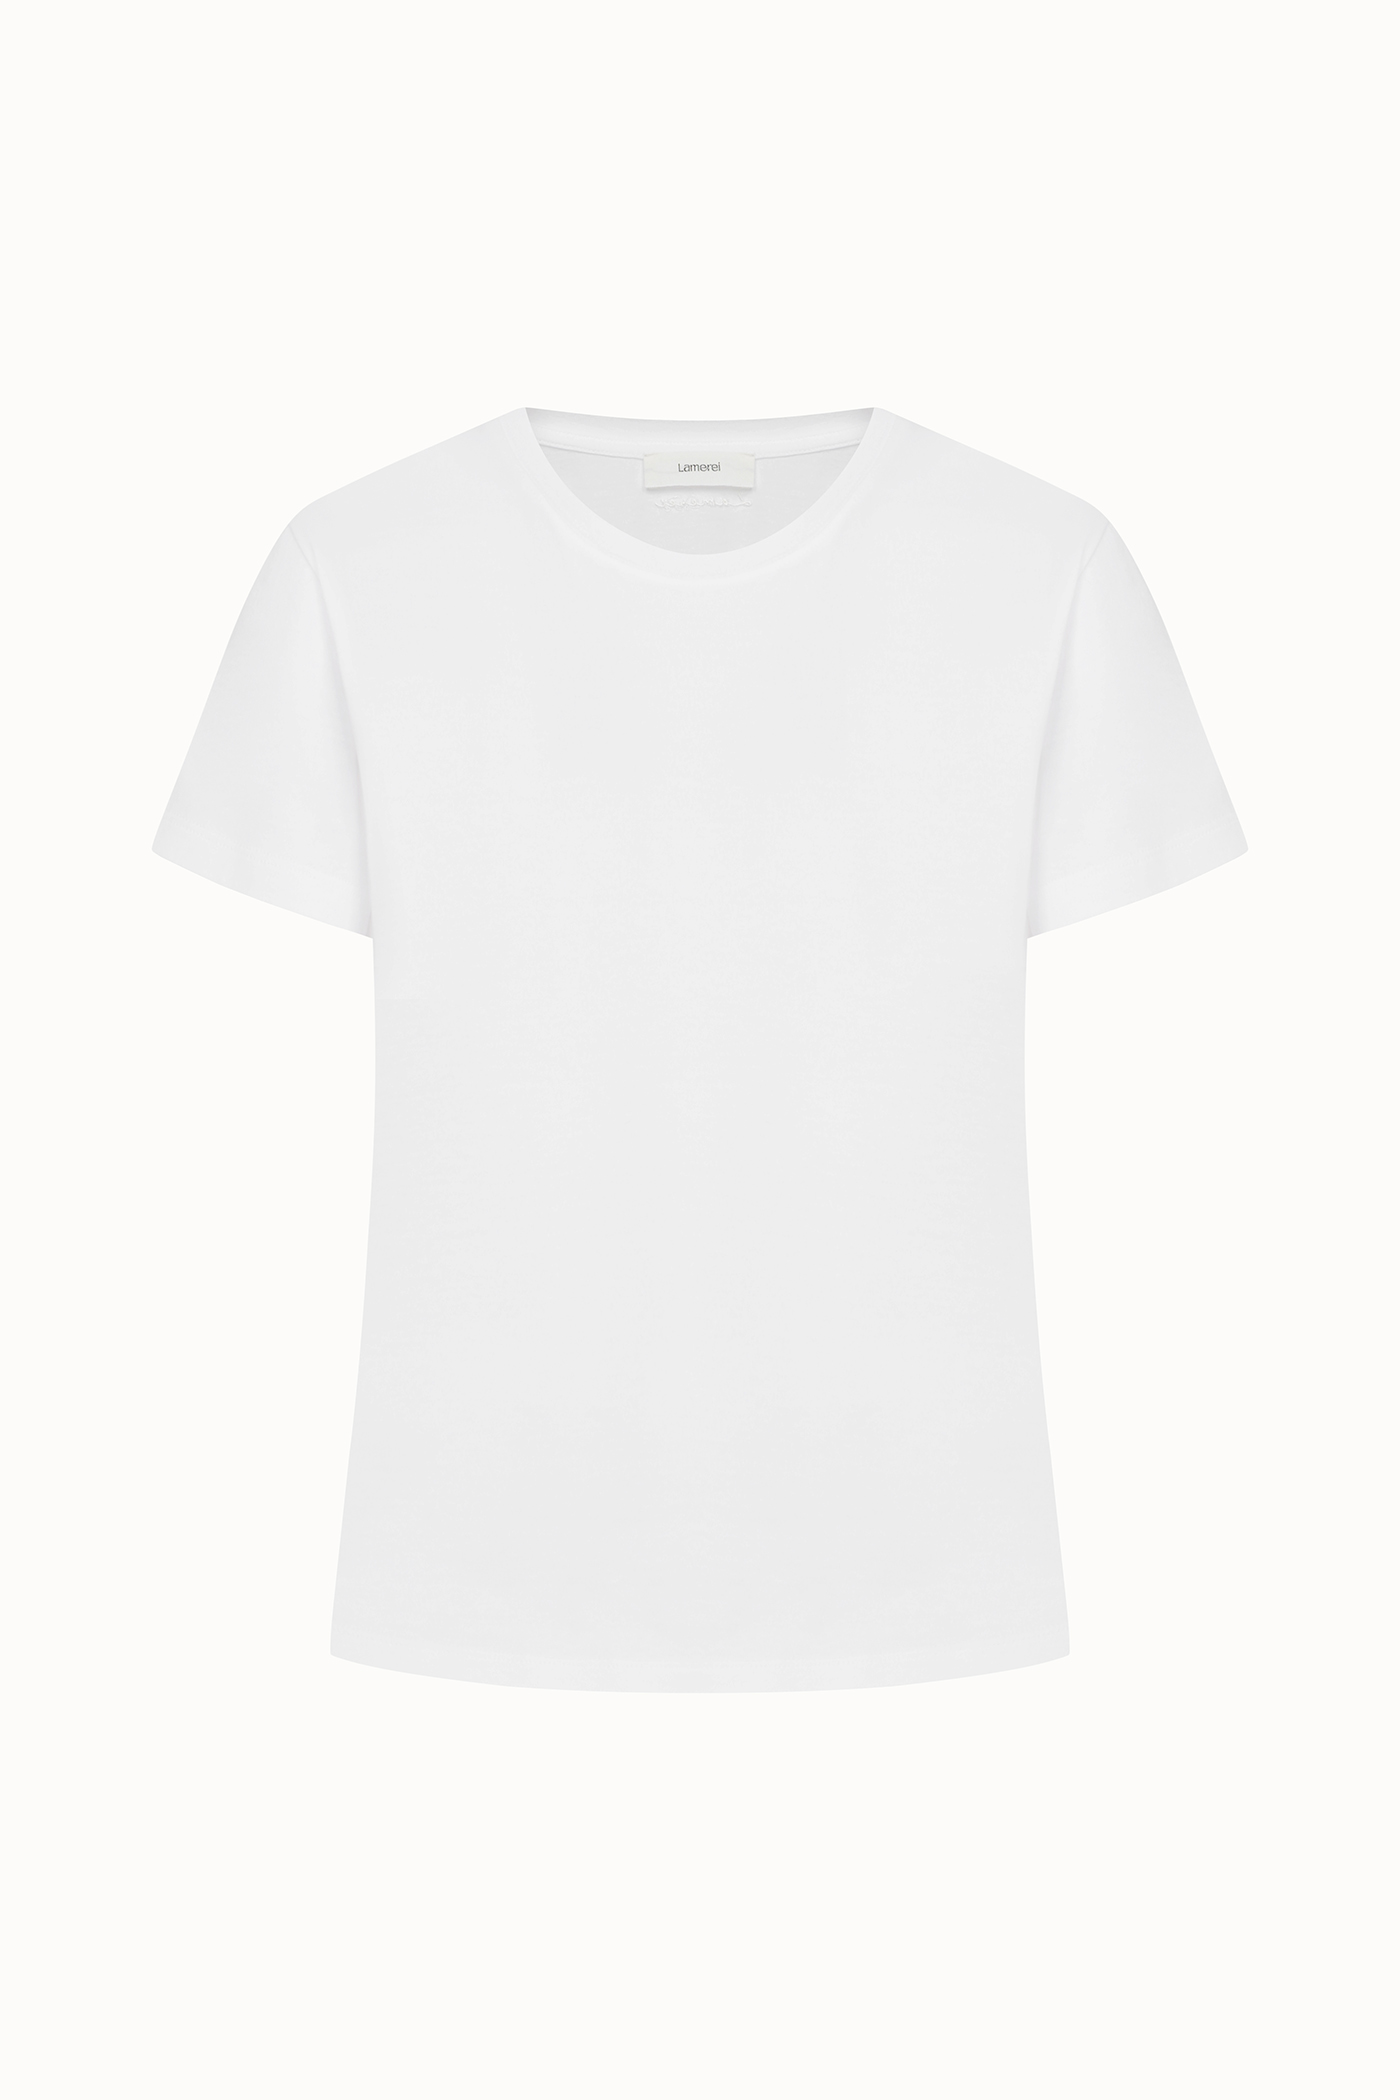 Tension Silket T-shirts[LMBDSUTT605]-2color